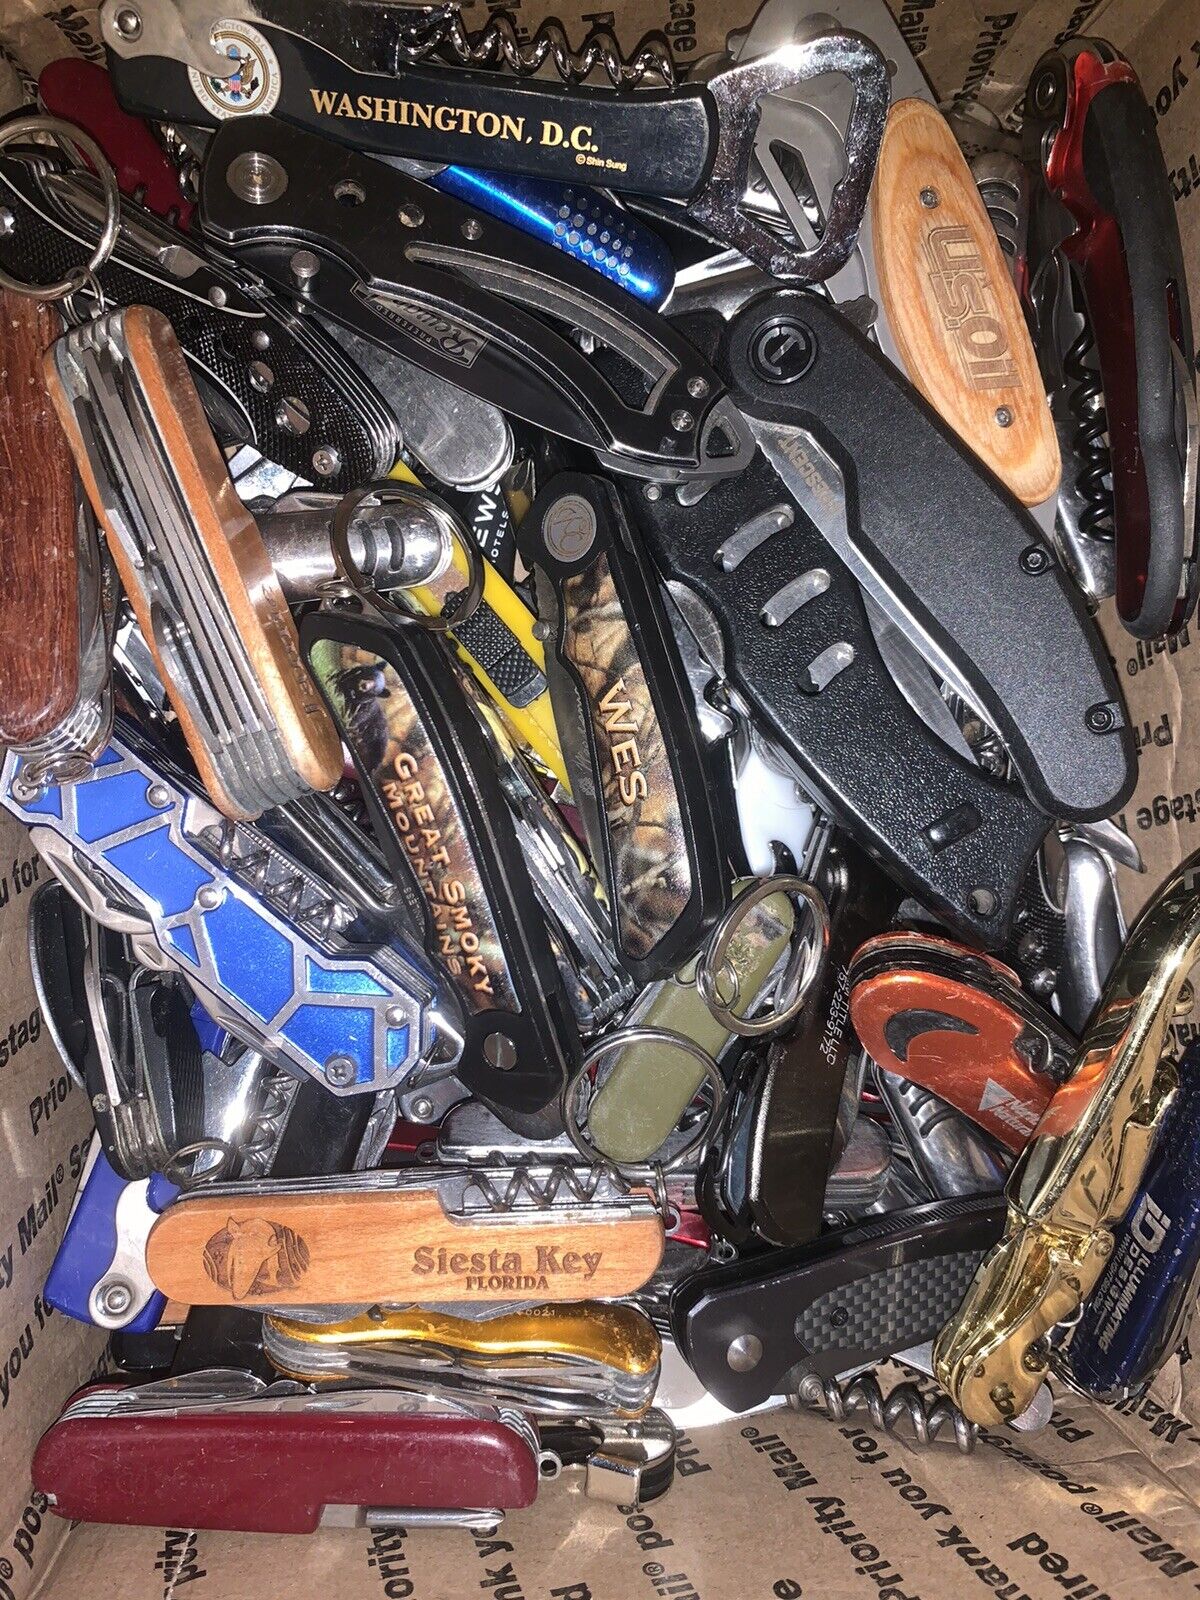 TSA Confiscated pocket knives/multitools lot